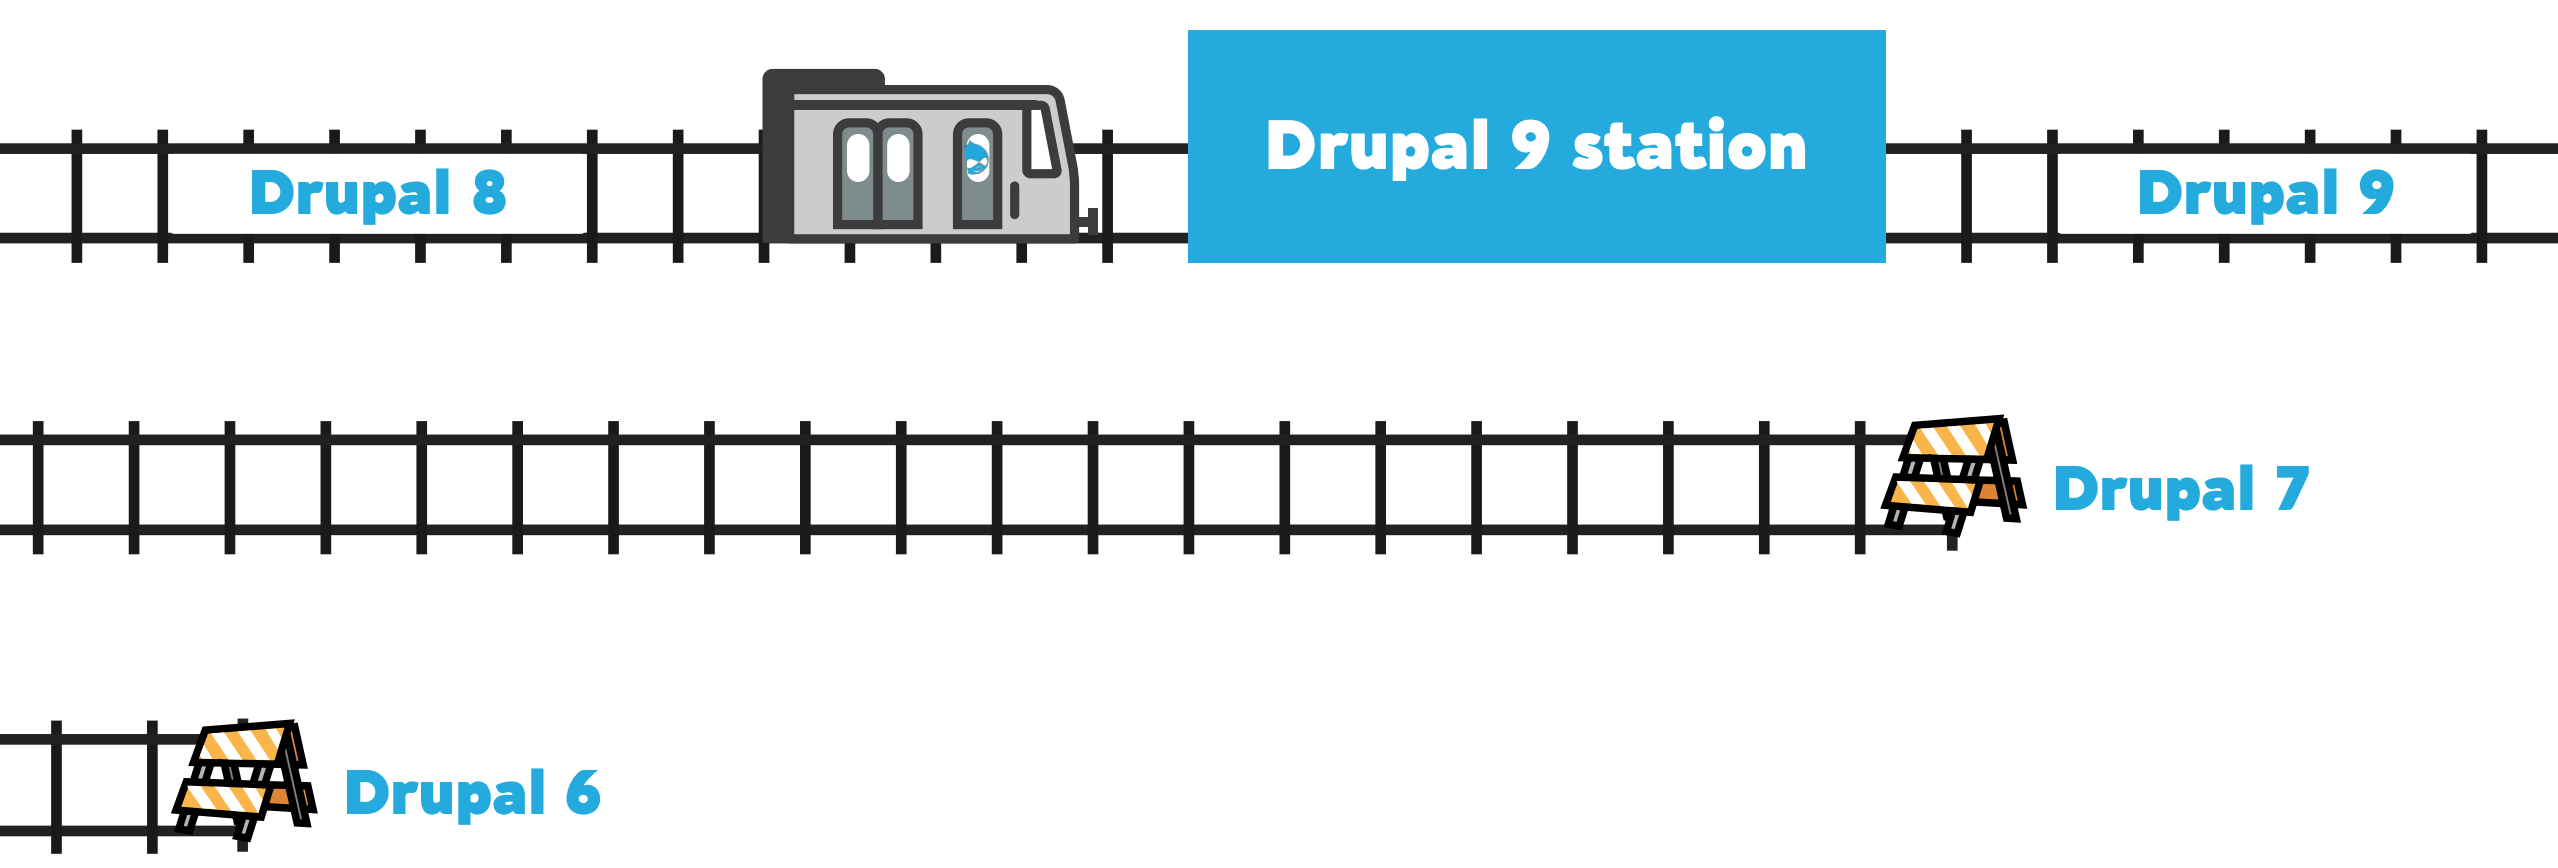 Drupal upgrade analogy